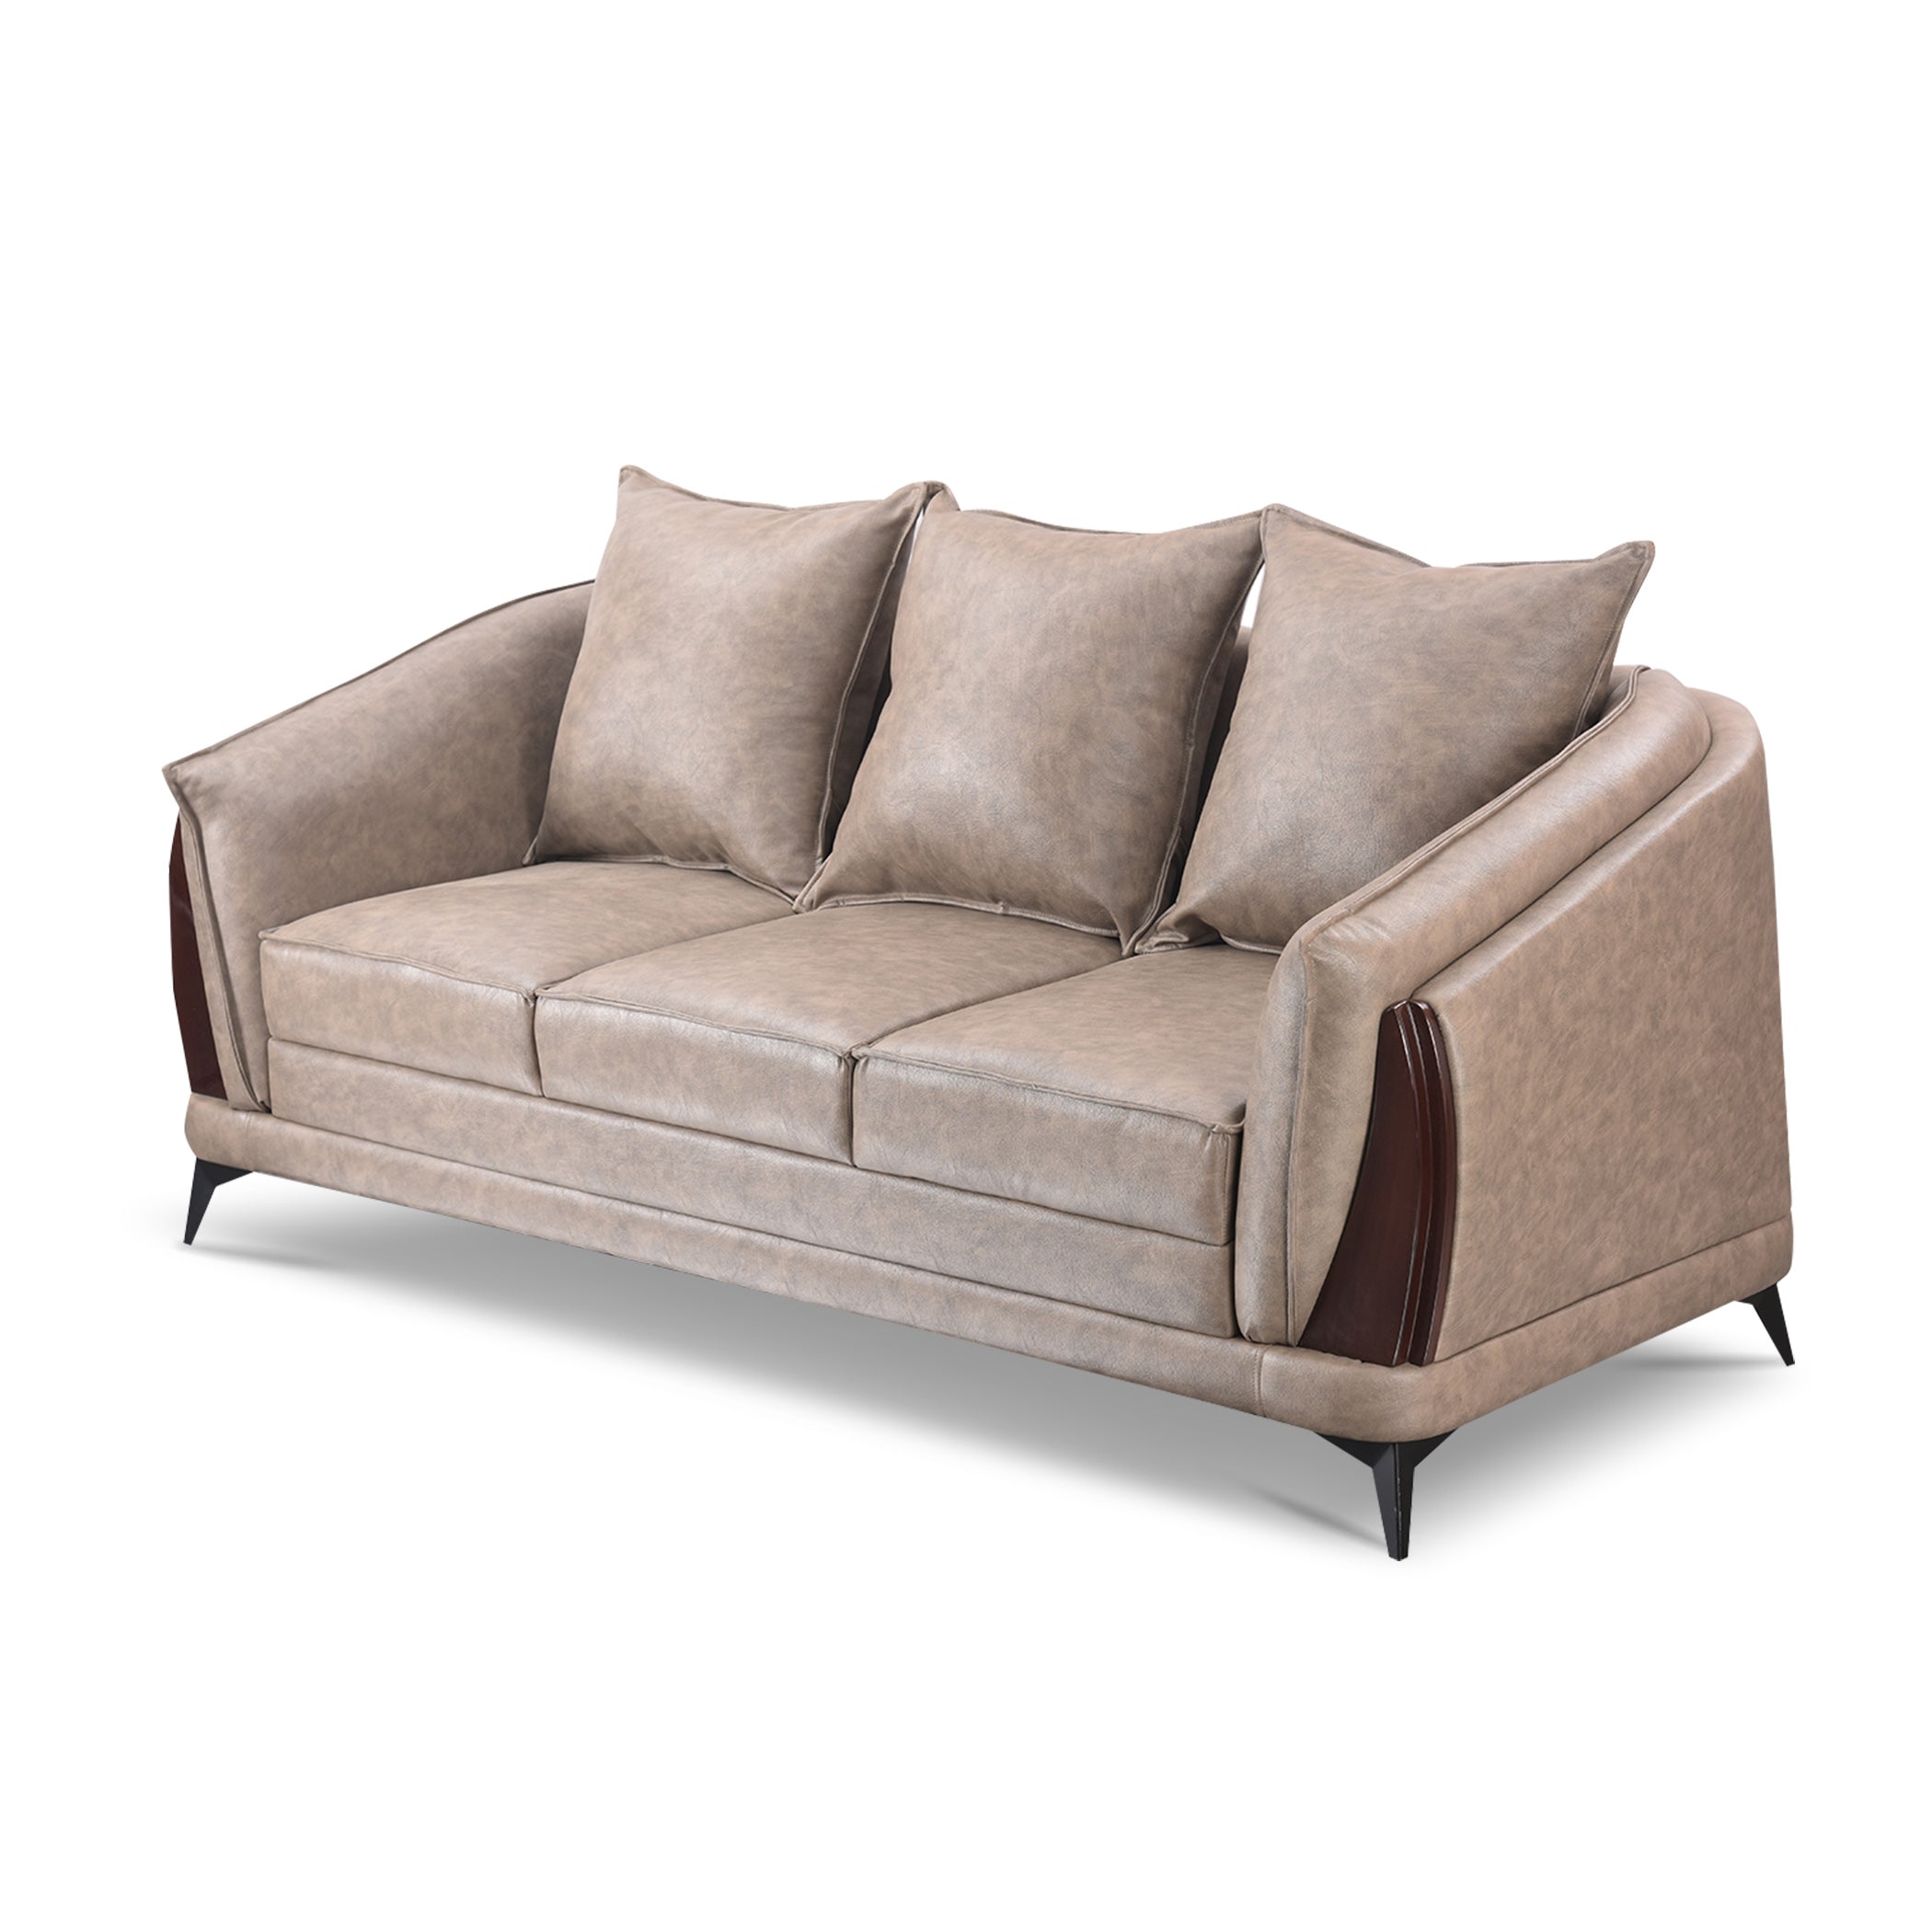 Columbus RoyalGrey 3S Sofa by Zorin Zorin